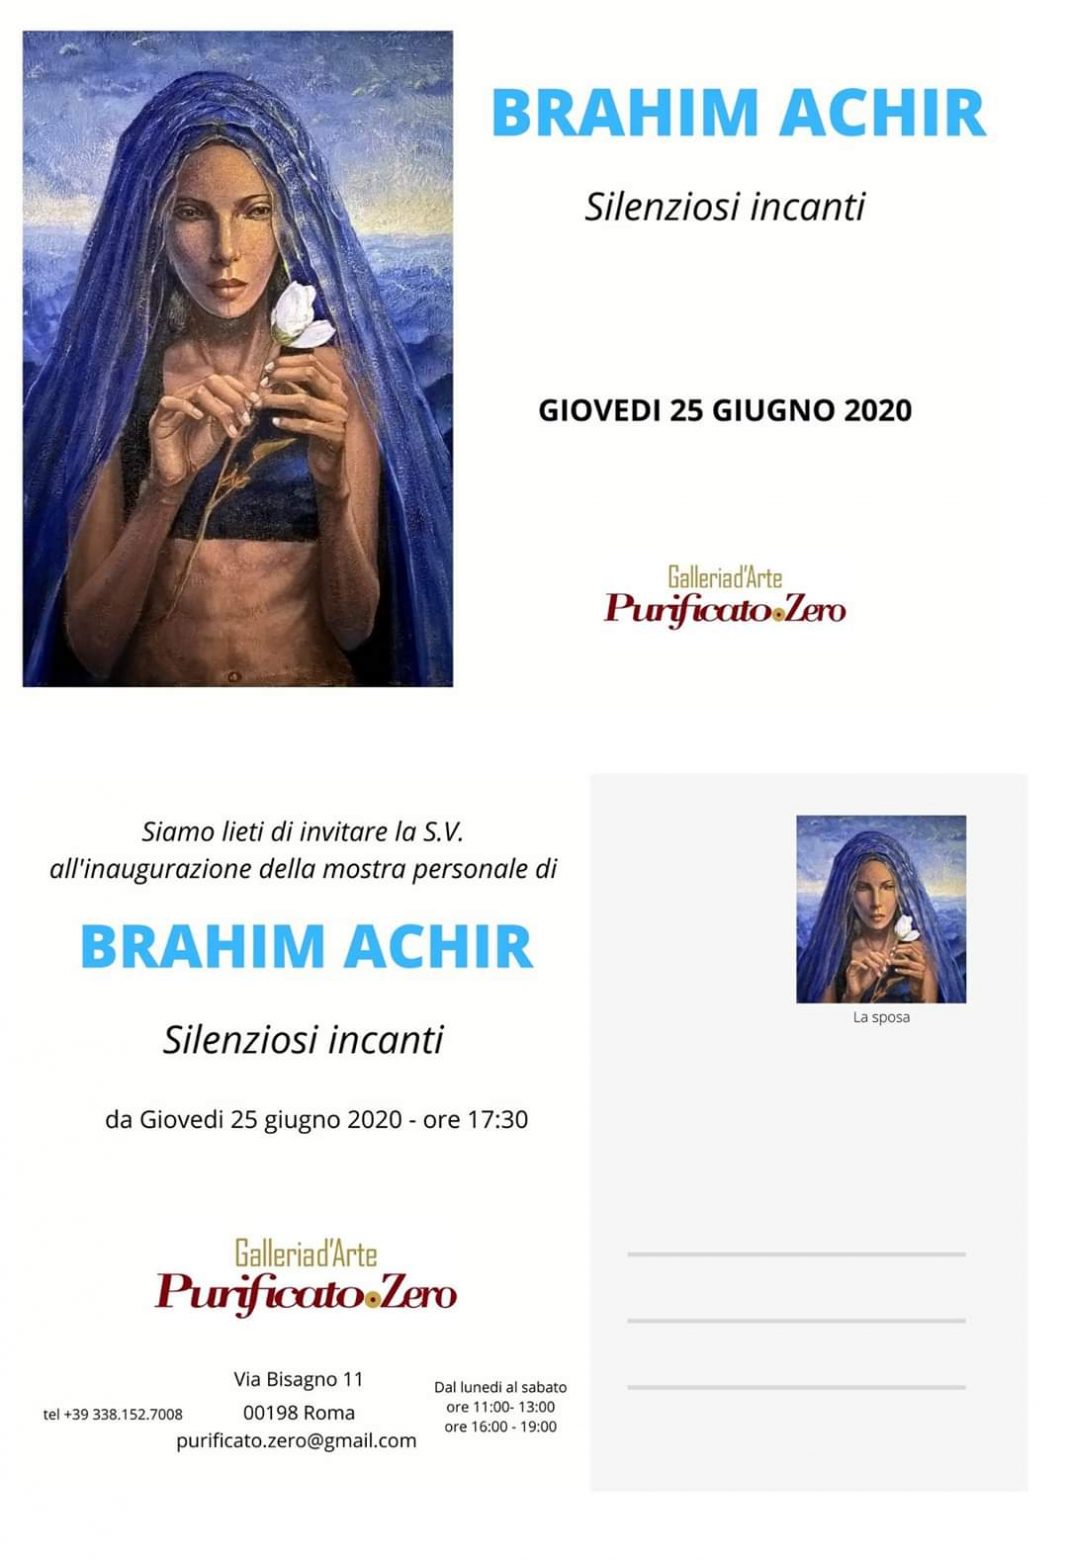 Brahim Achir – Silenziosi incantihttps://www.exibart.com/repository/media/formidable/11/FB_IMG_1592557581292-1068x1561.jpg